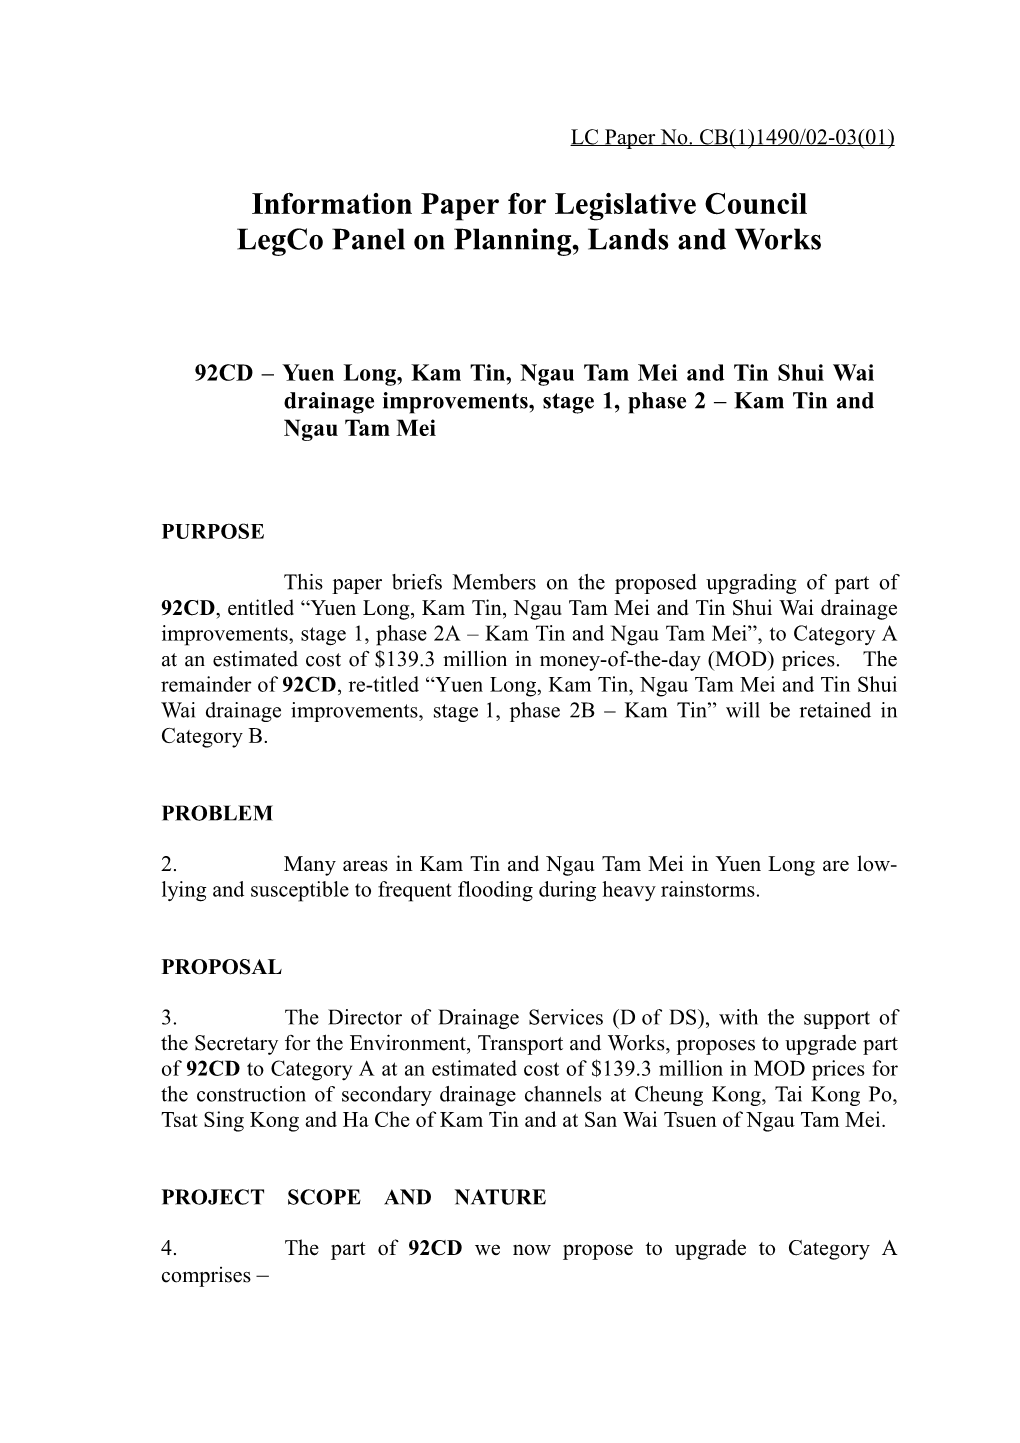 Information Paper for Legislative Council Legco Panel on Planning, Lands and Works